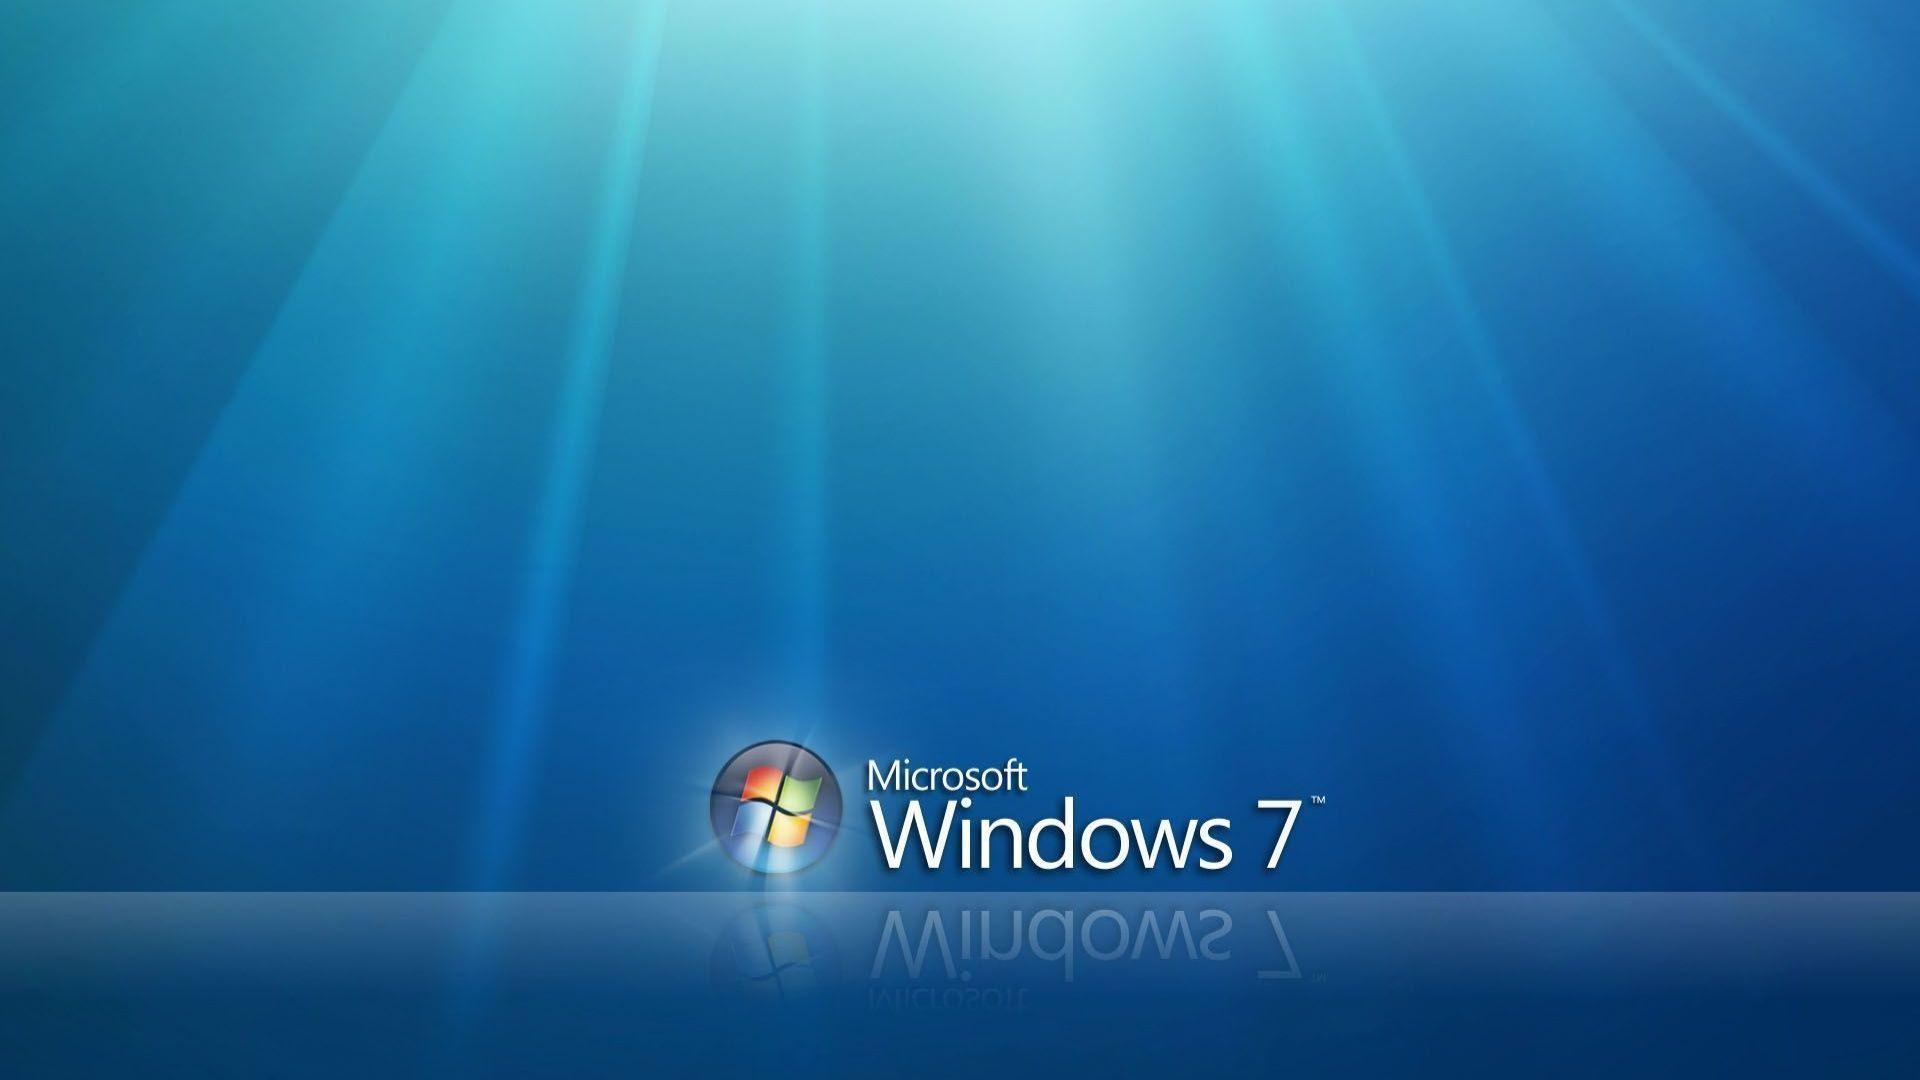 Luxurius Windows 7 Ultimate Wallpaper 1920×1080 40 on dual